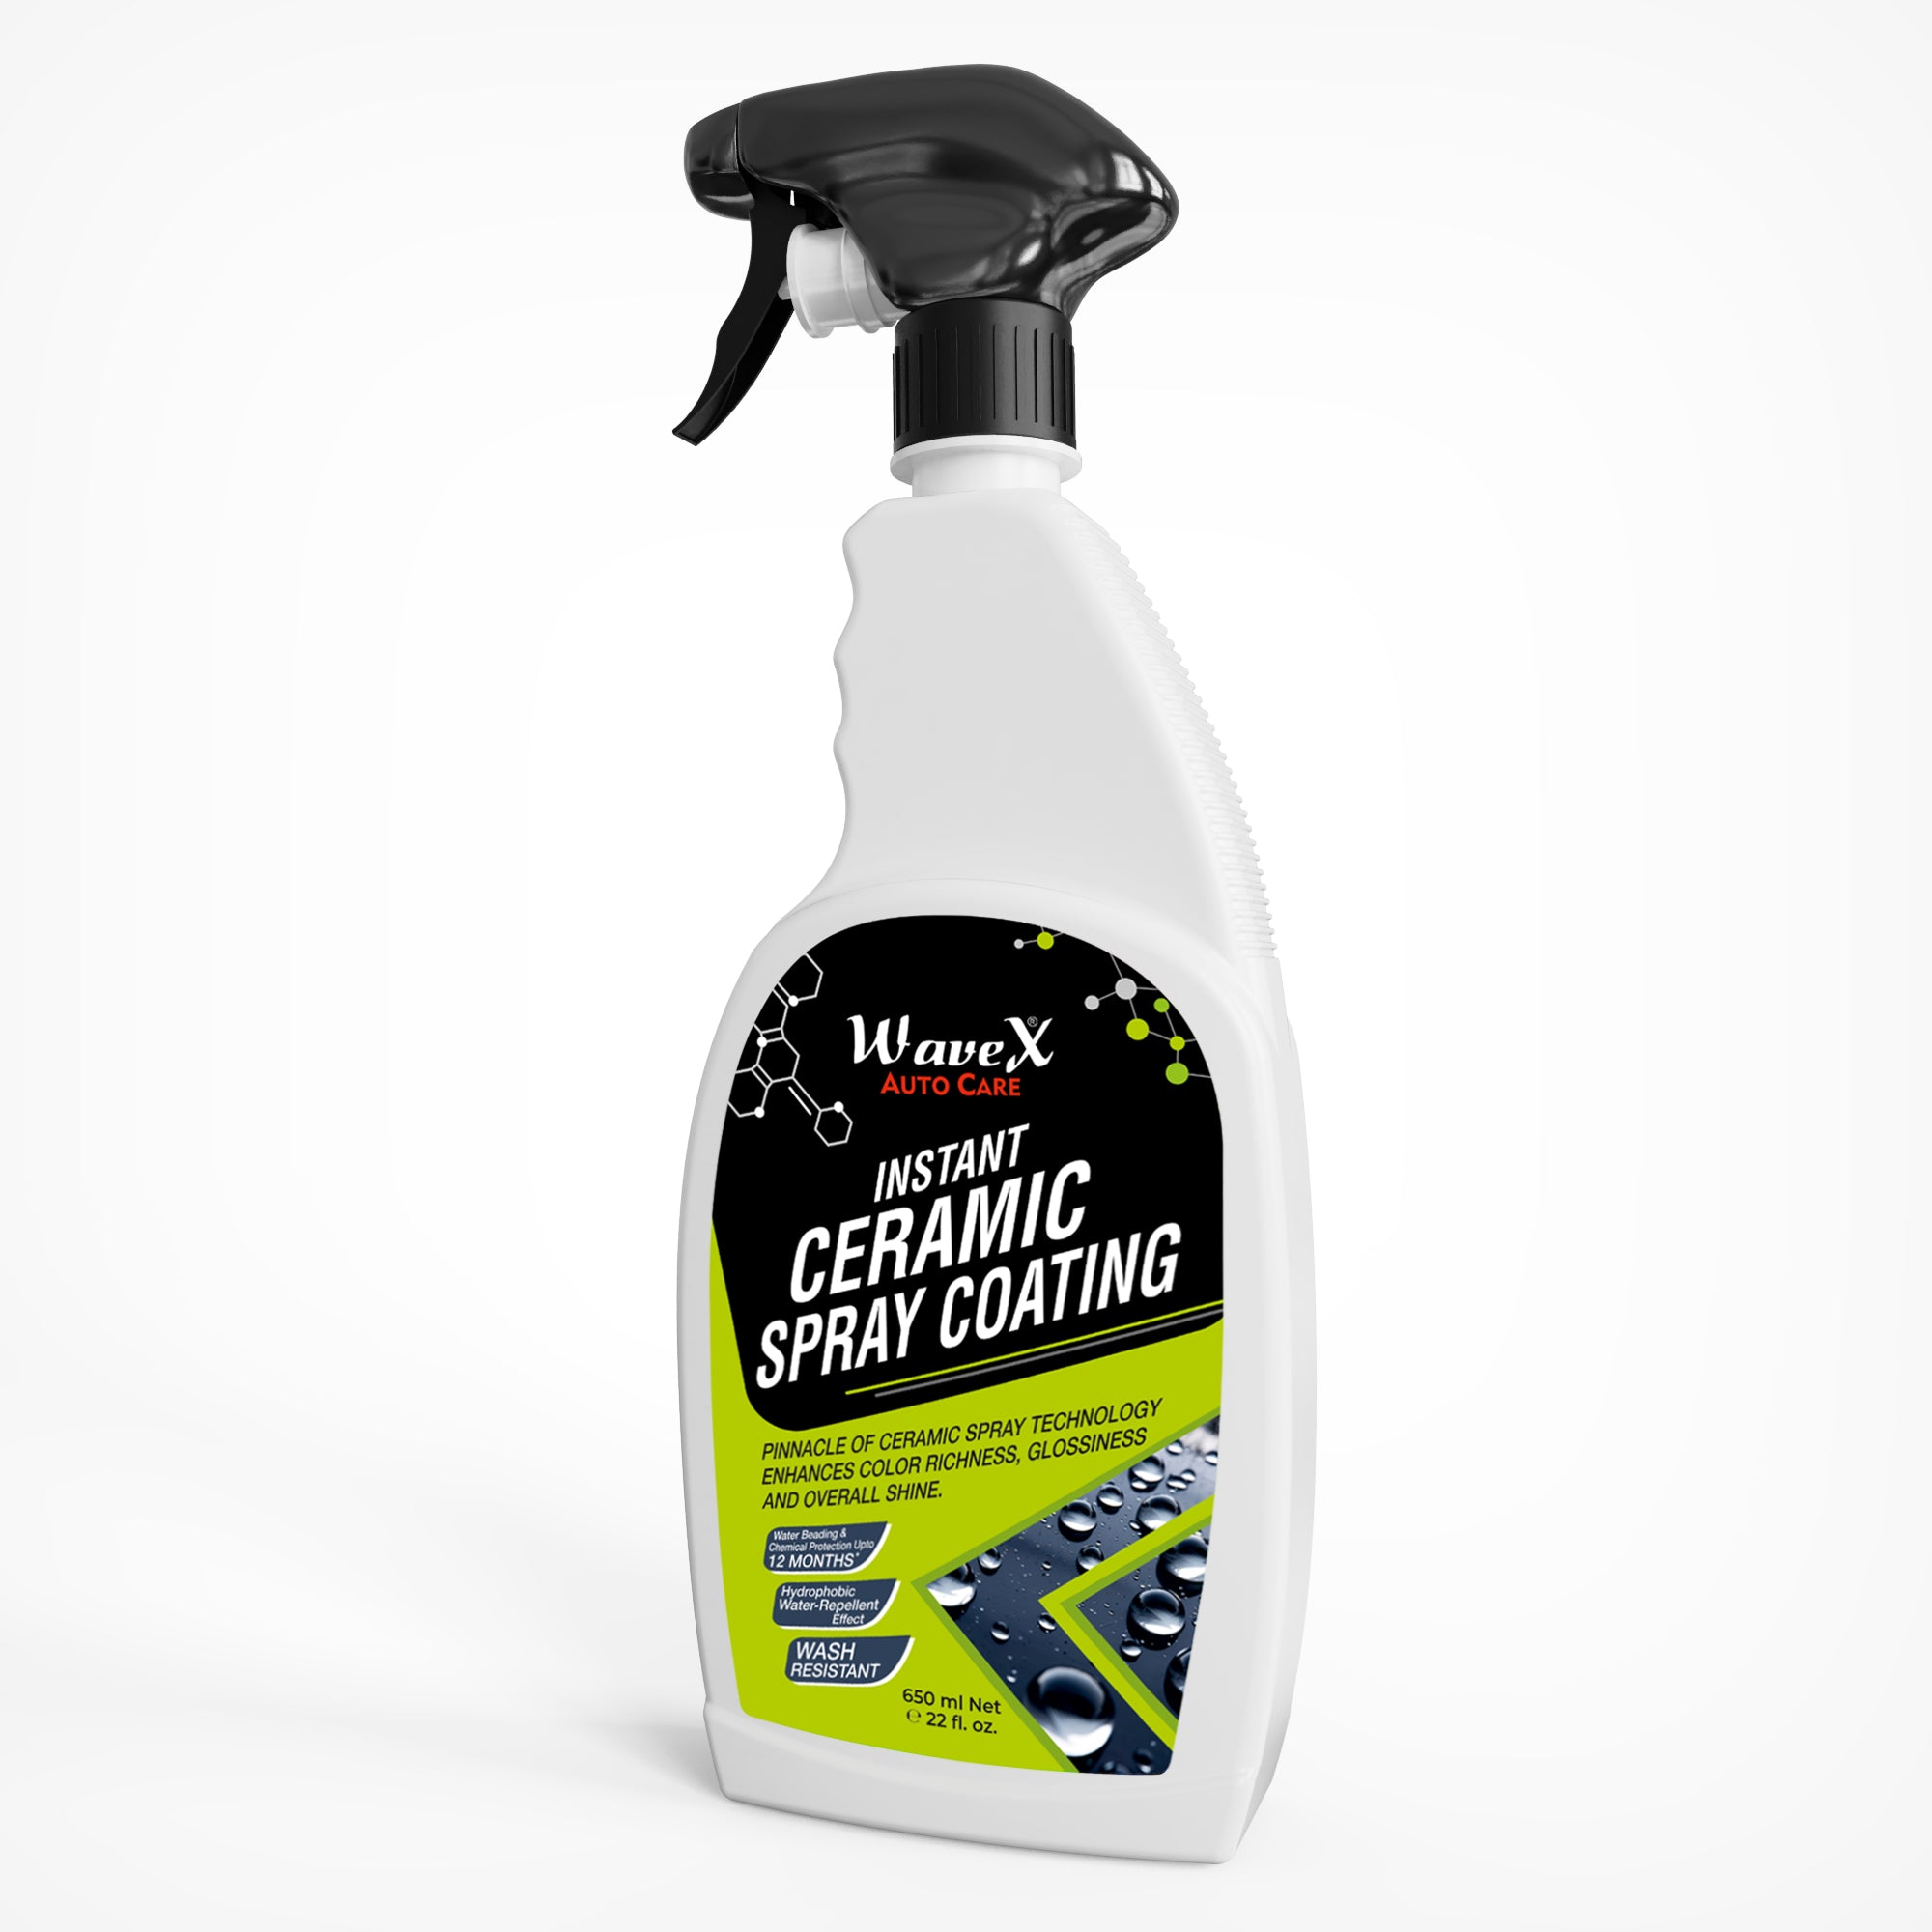 300ml Car Coating Spray Car Wax Polish Spray Water-repellent Car